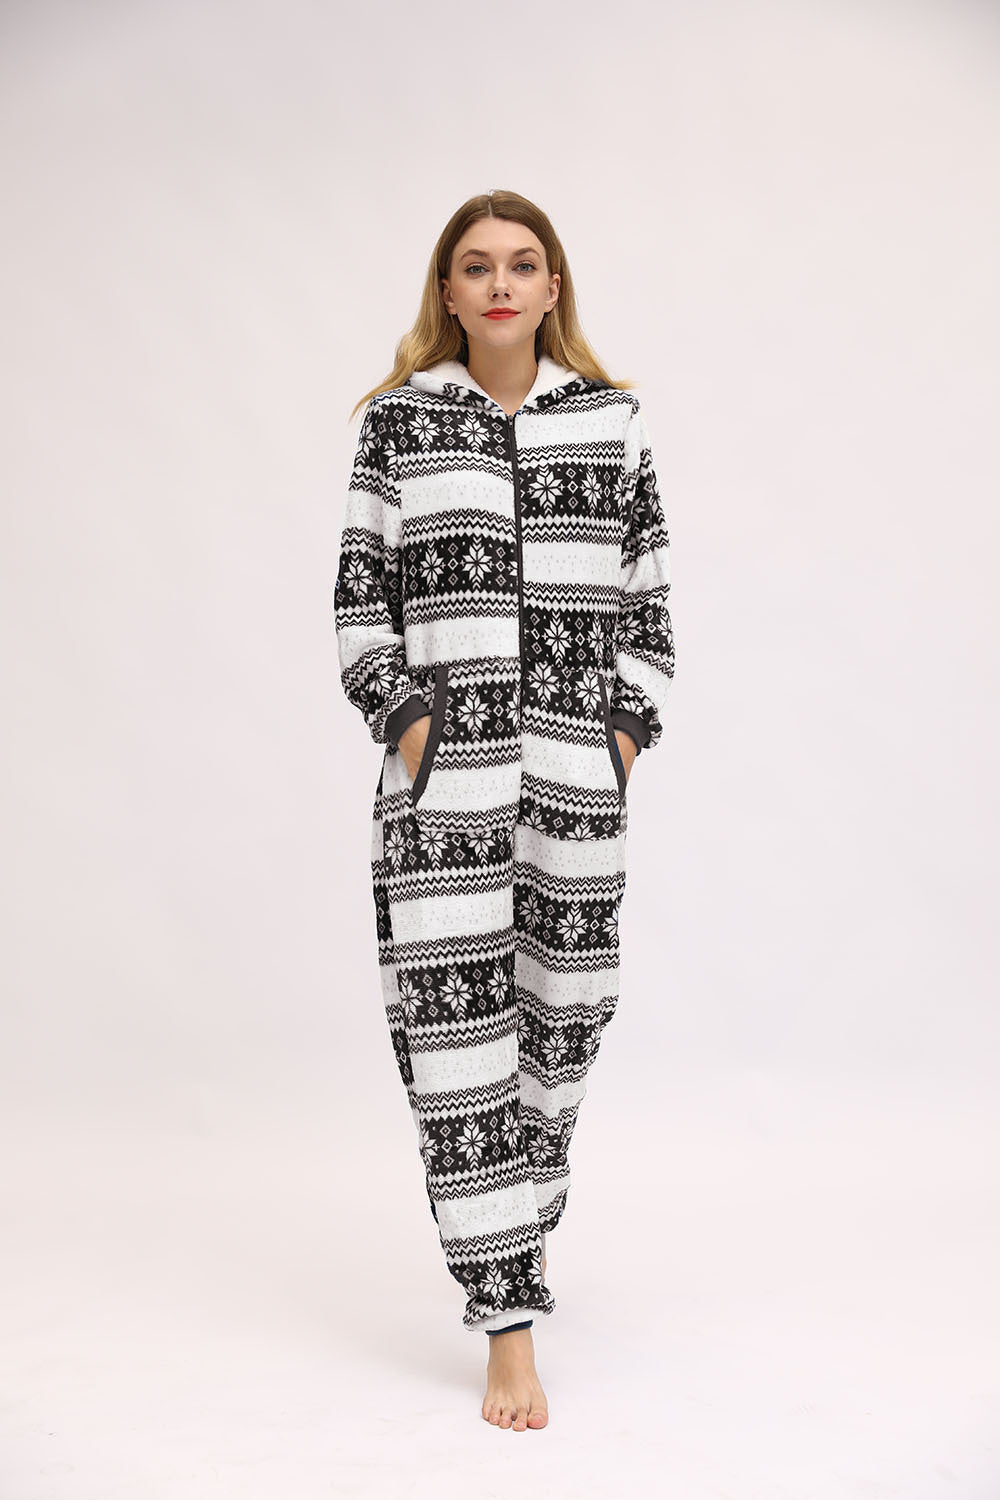 Women Christmas Festival Deer Snowflake Flannel Jumpsuit Pajamas Home Wear